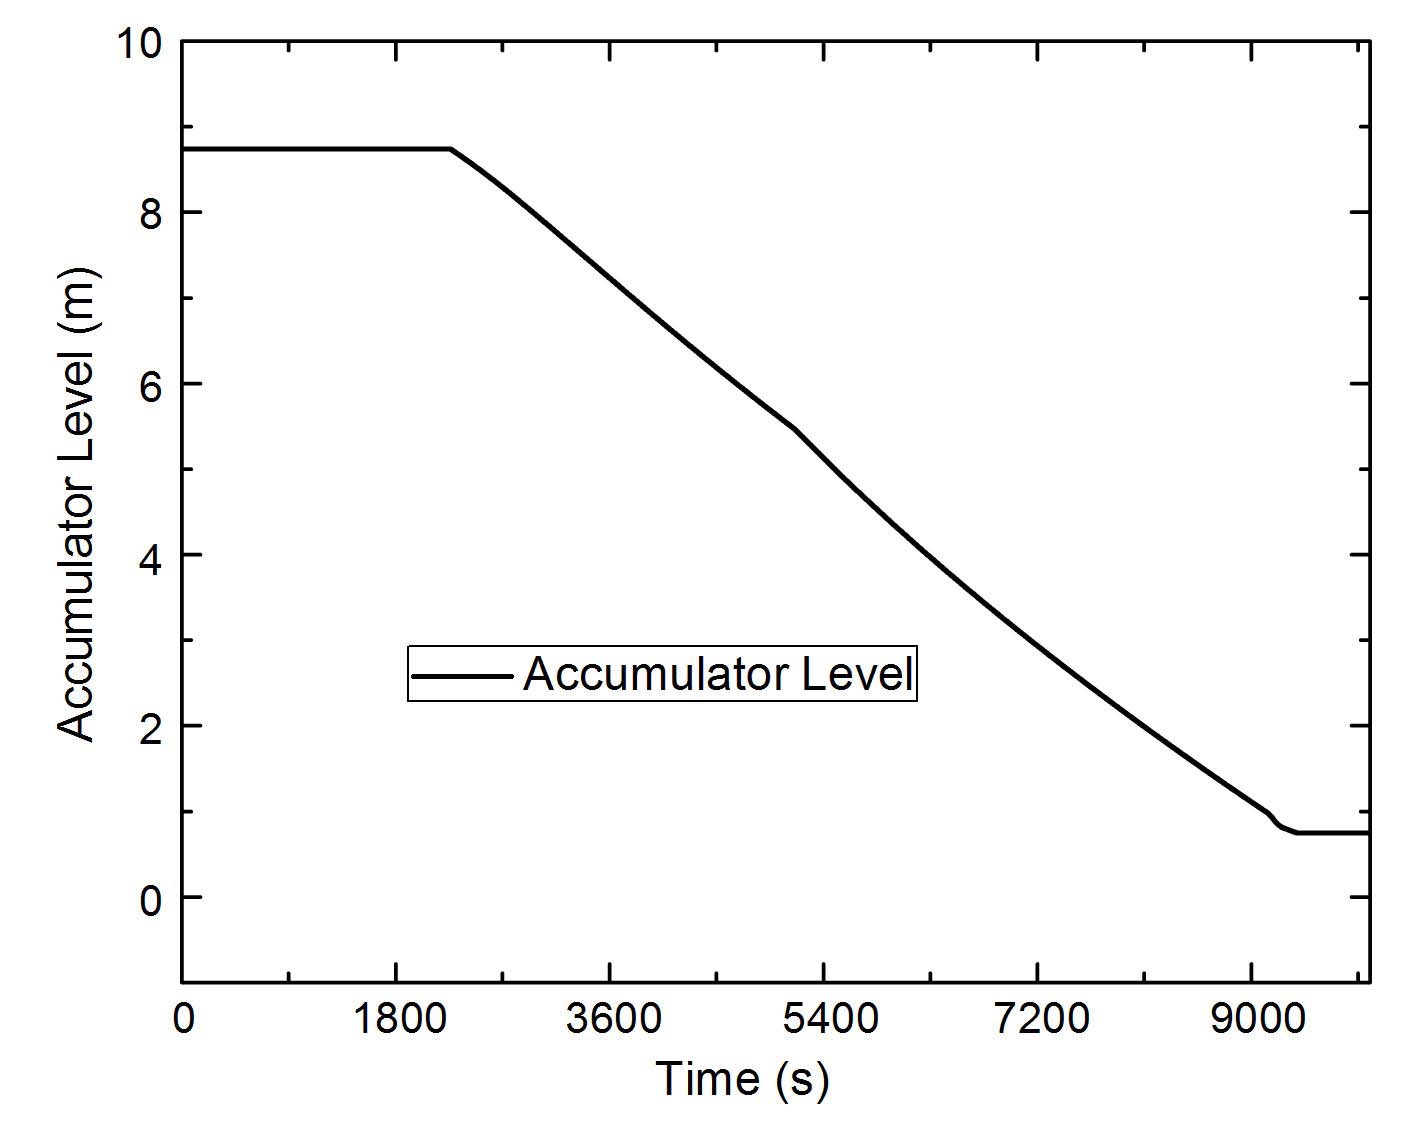 Accumulator Water Level during Fukushima-like Accident